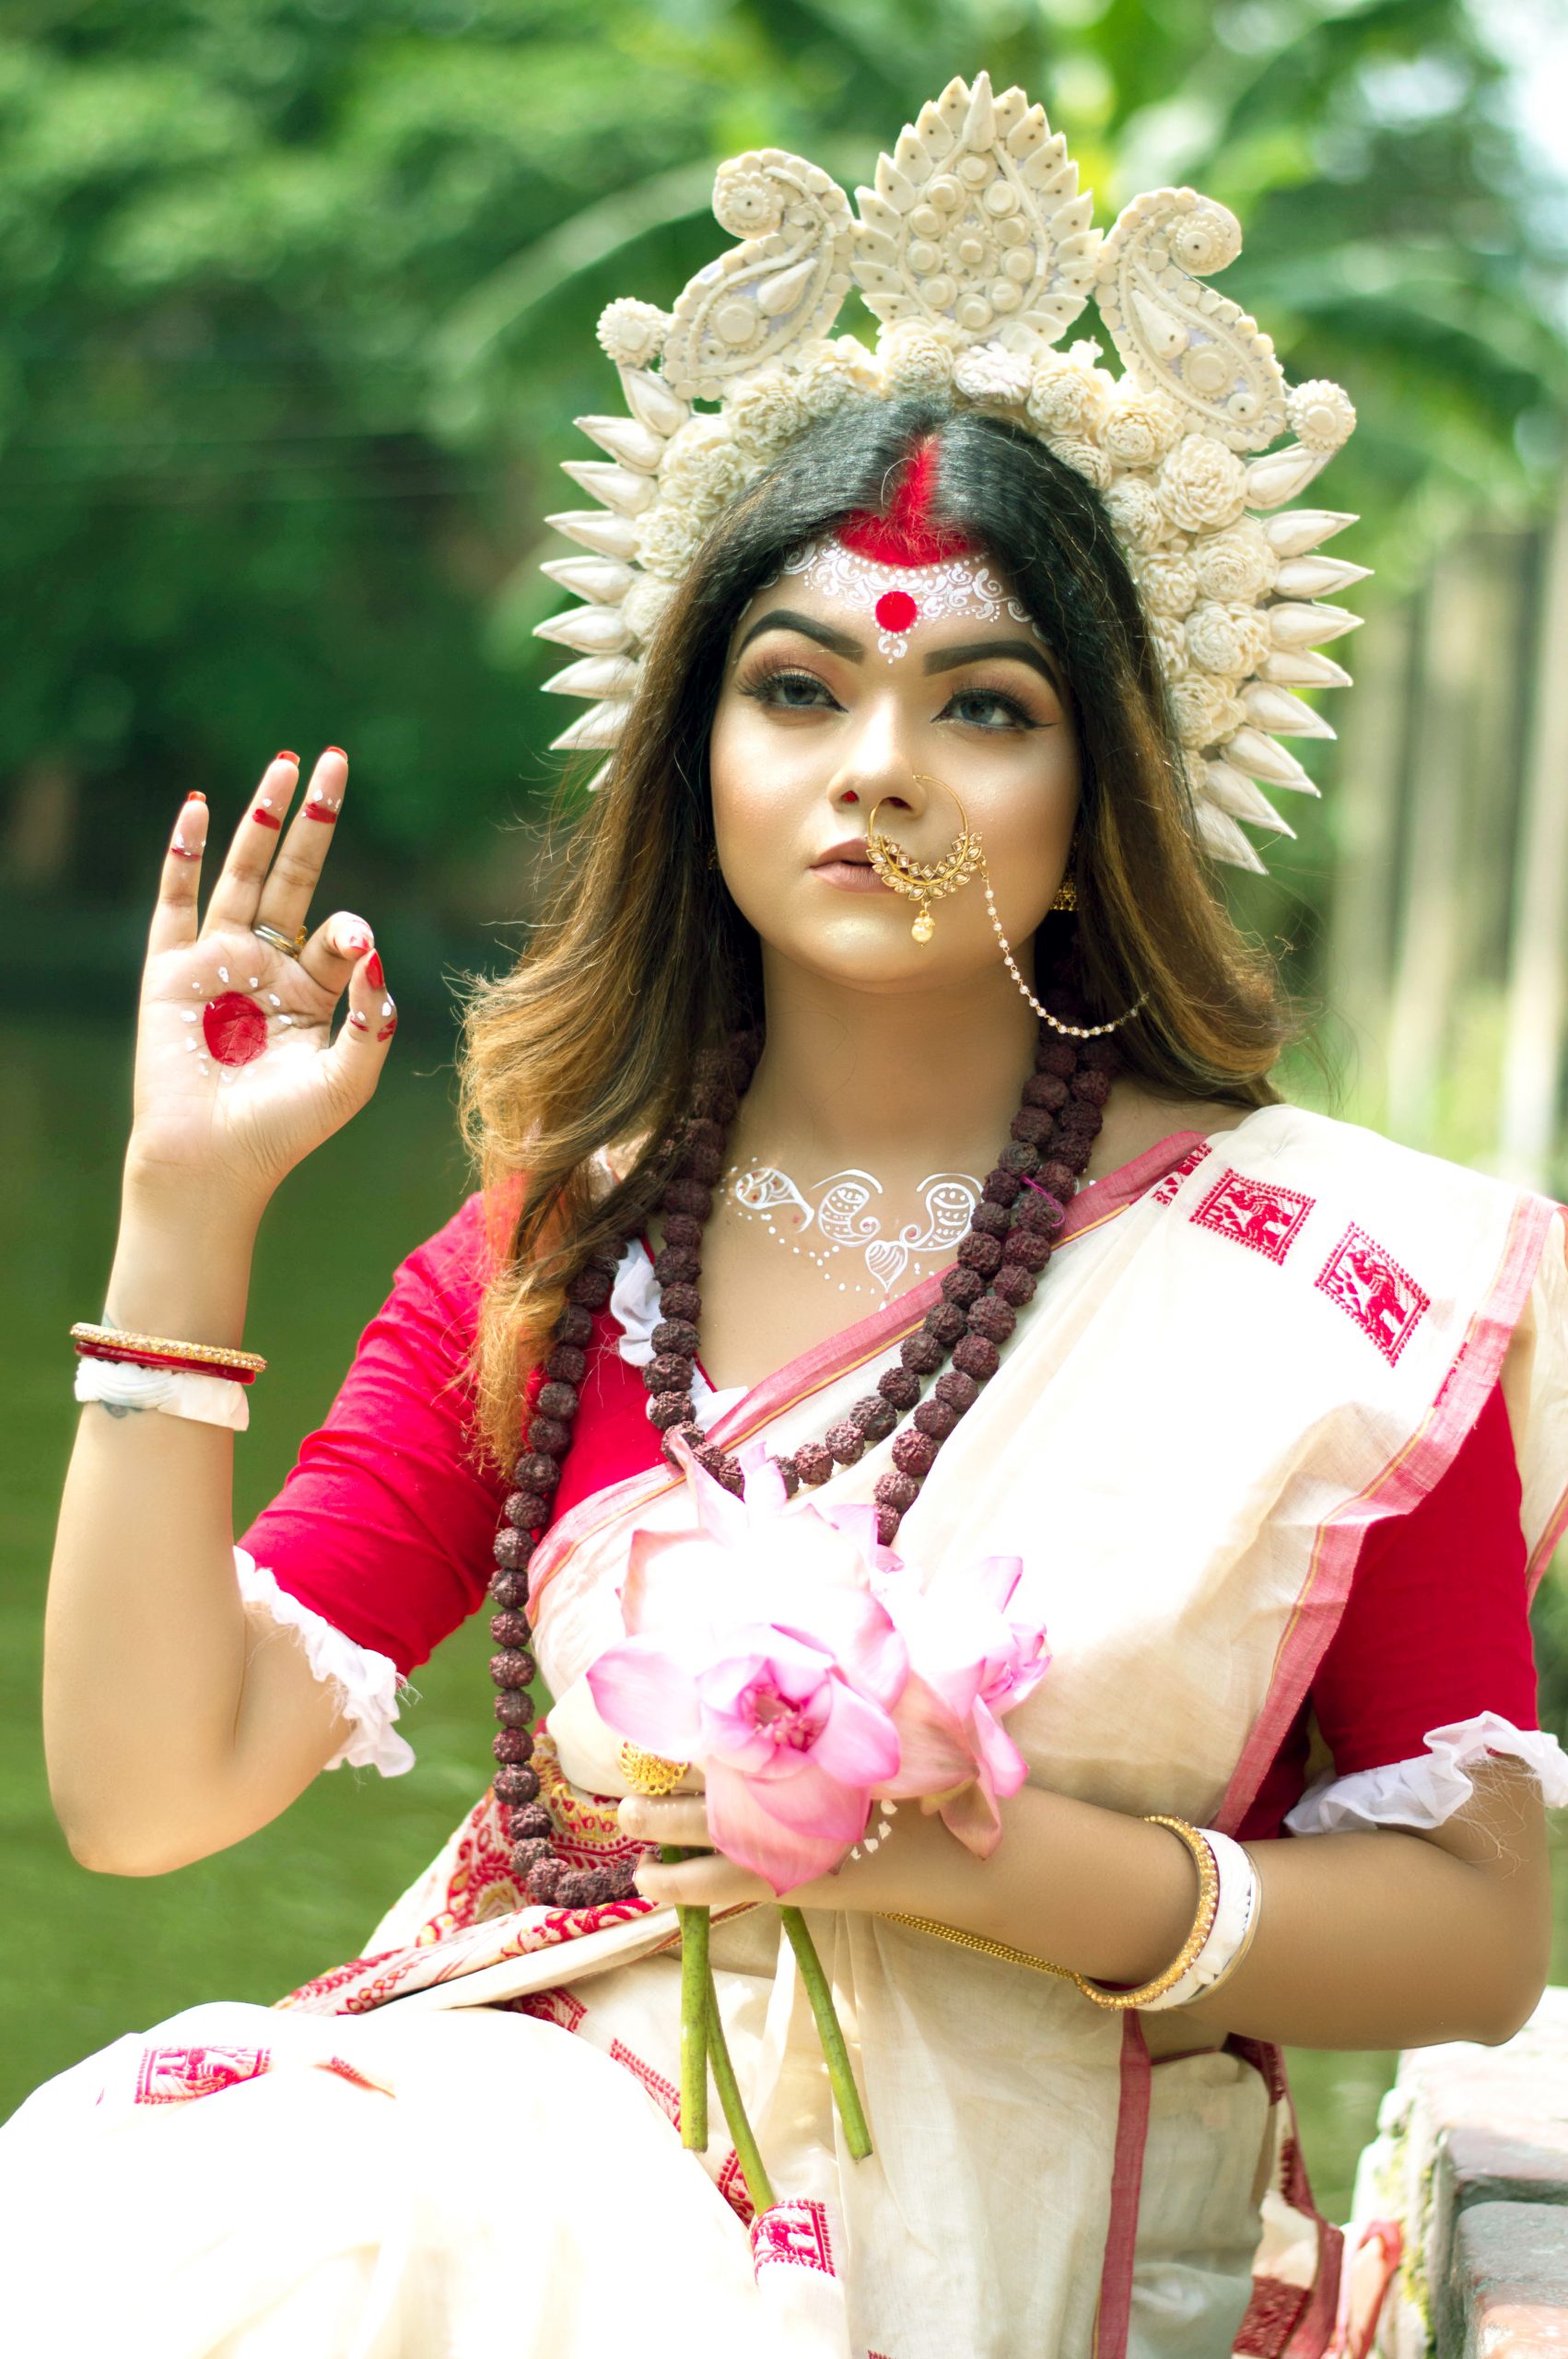 An impersonator of Goddess Durga